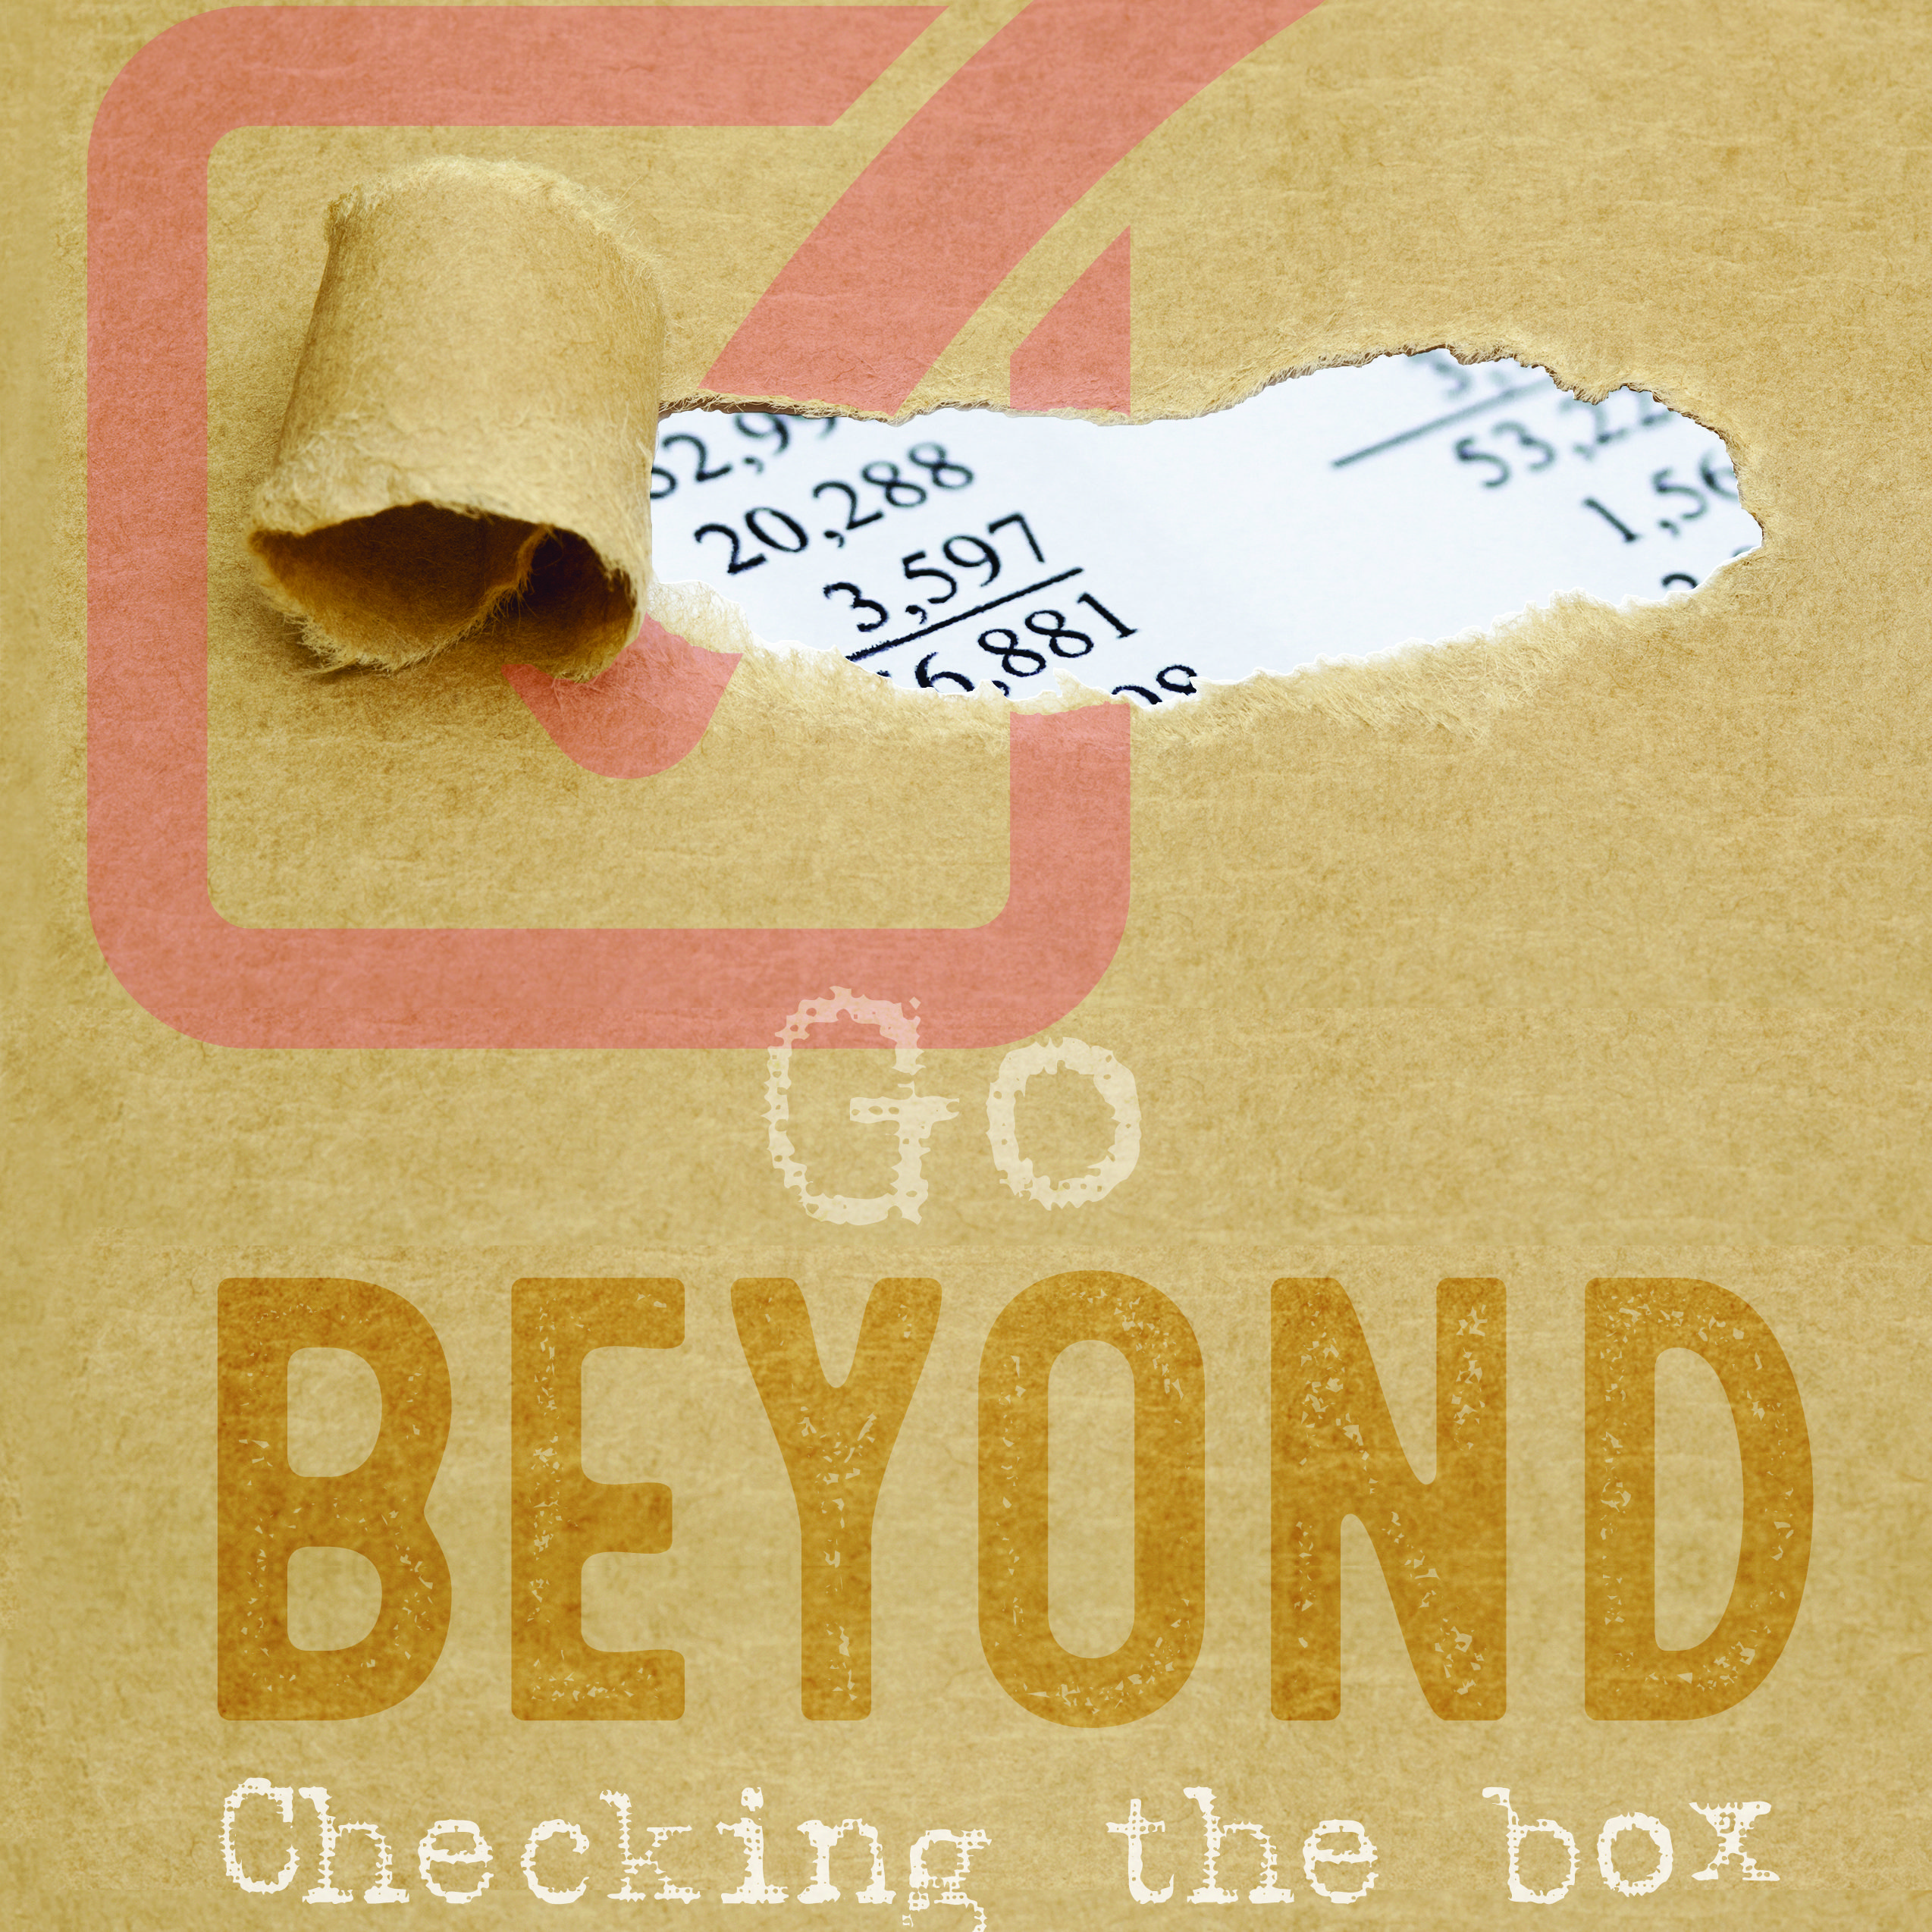 Go Beyond Checking the Box